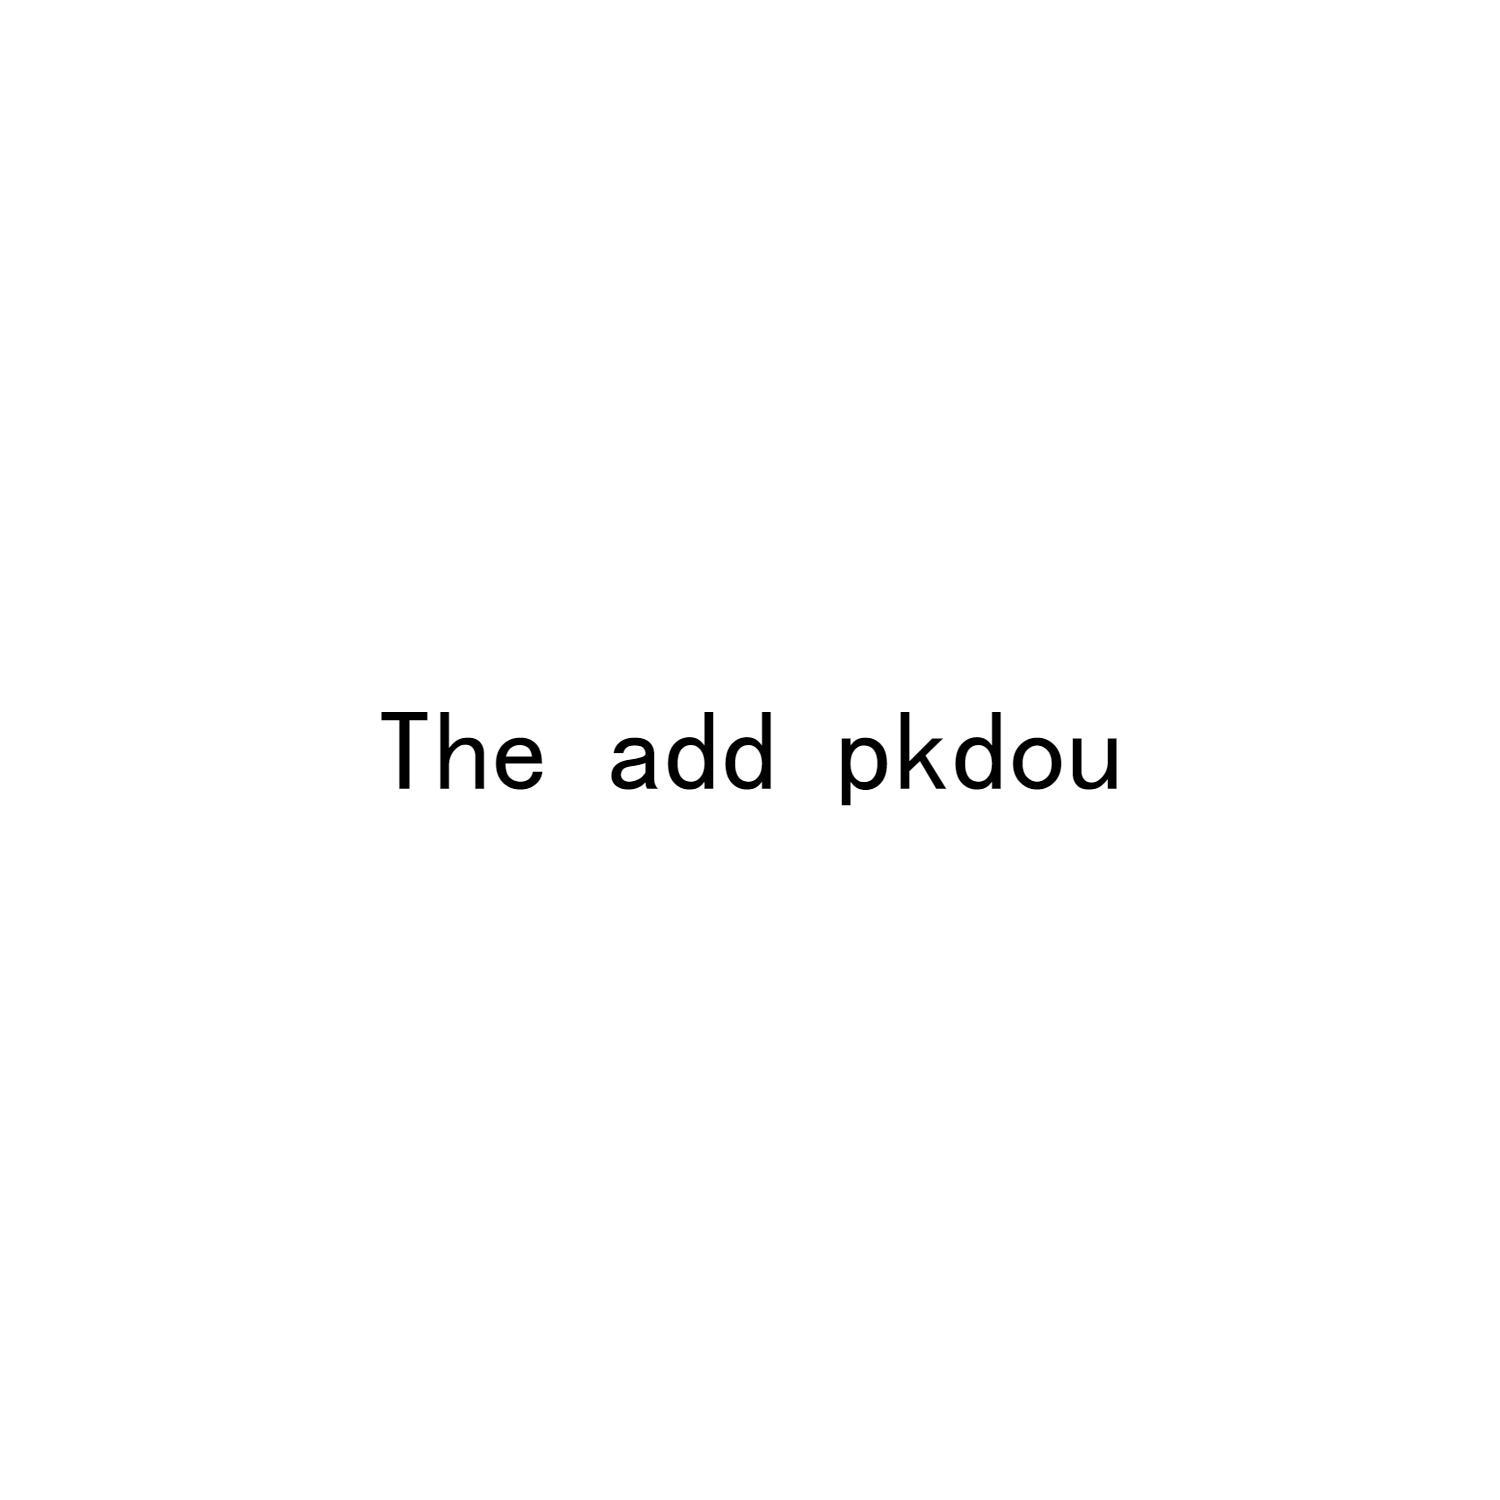 THE ADD PKDOU